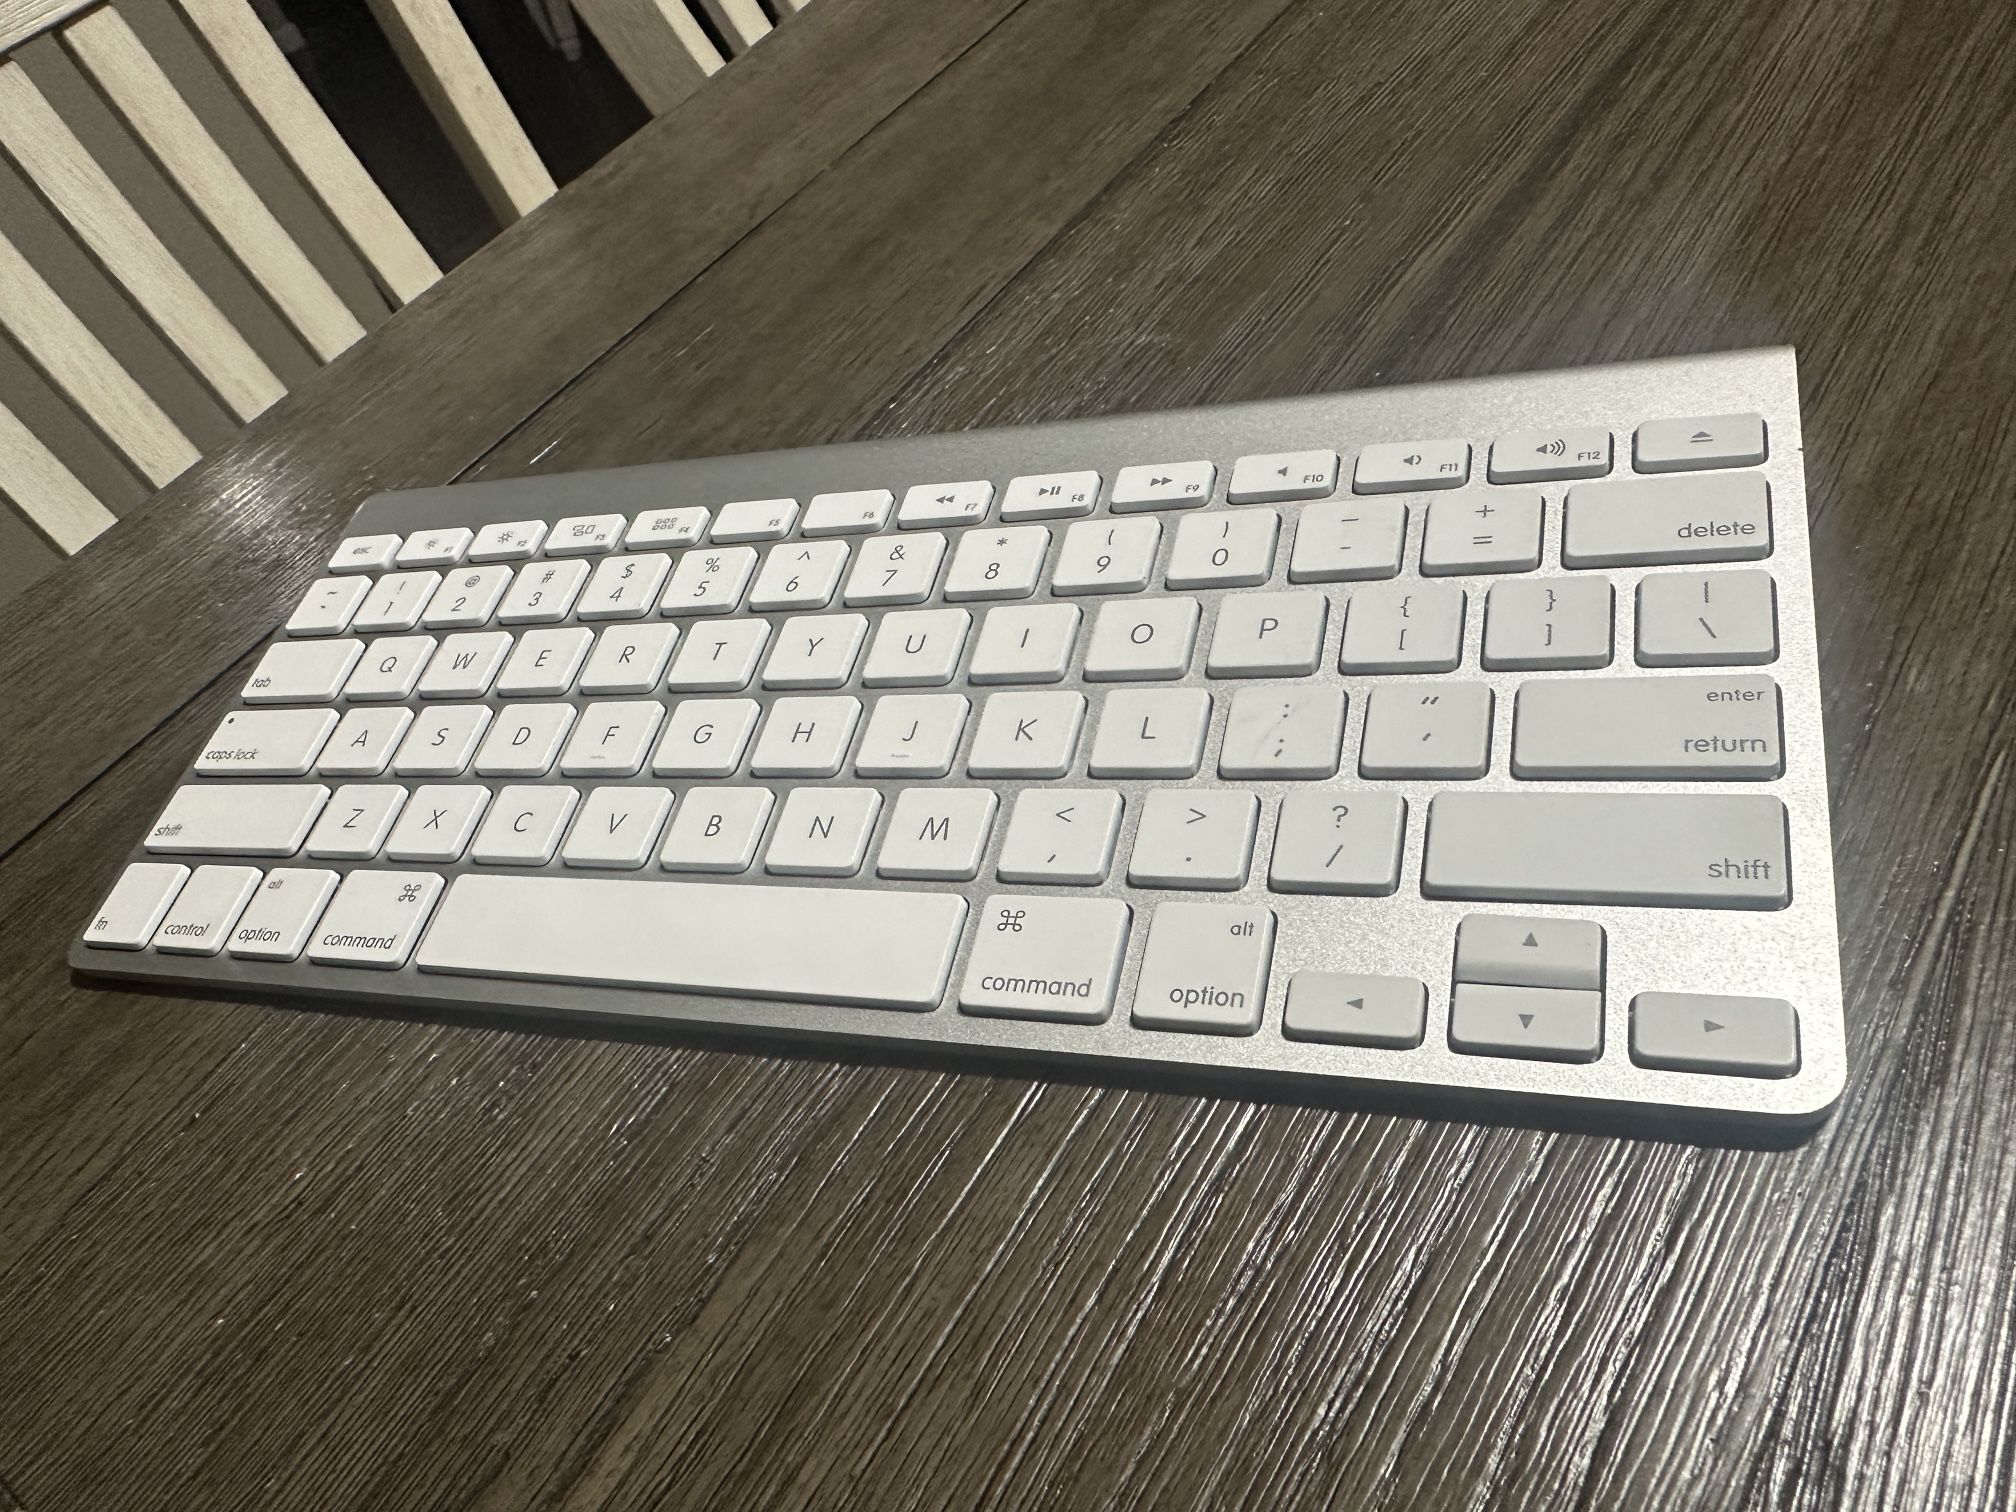 Apple Wireless Keyboard with Bluetooth - Silver